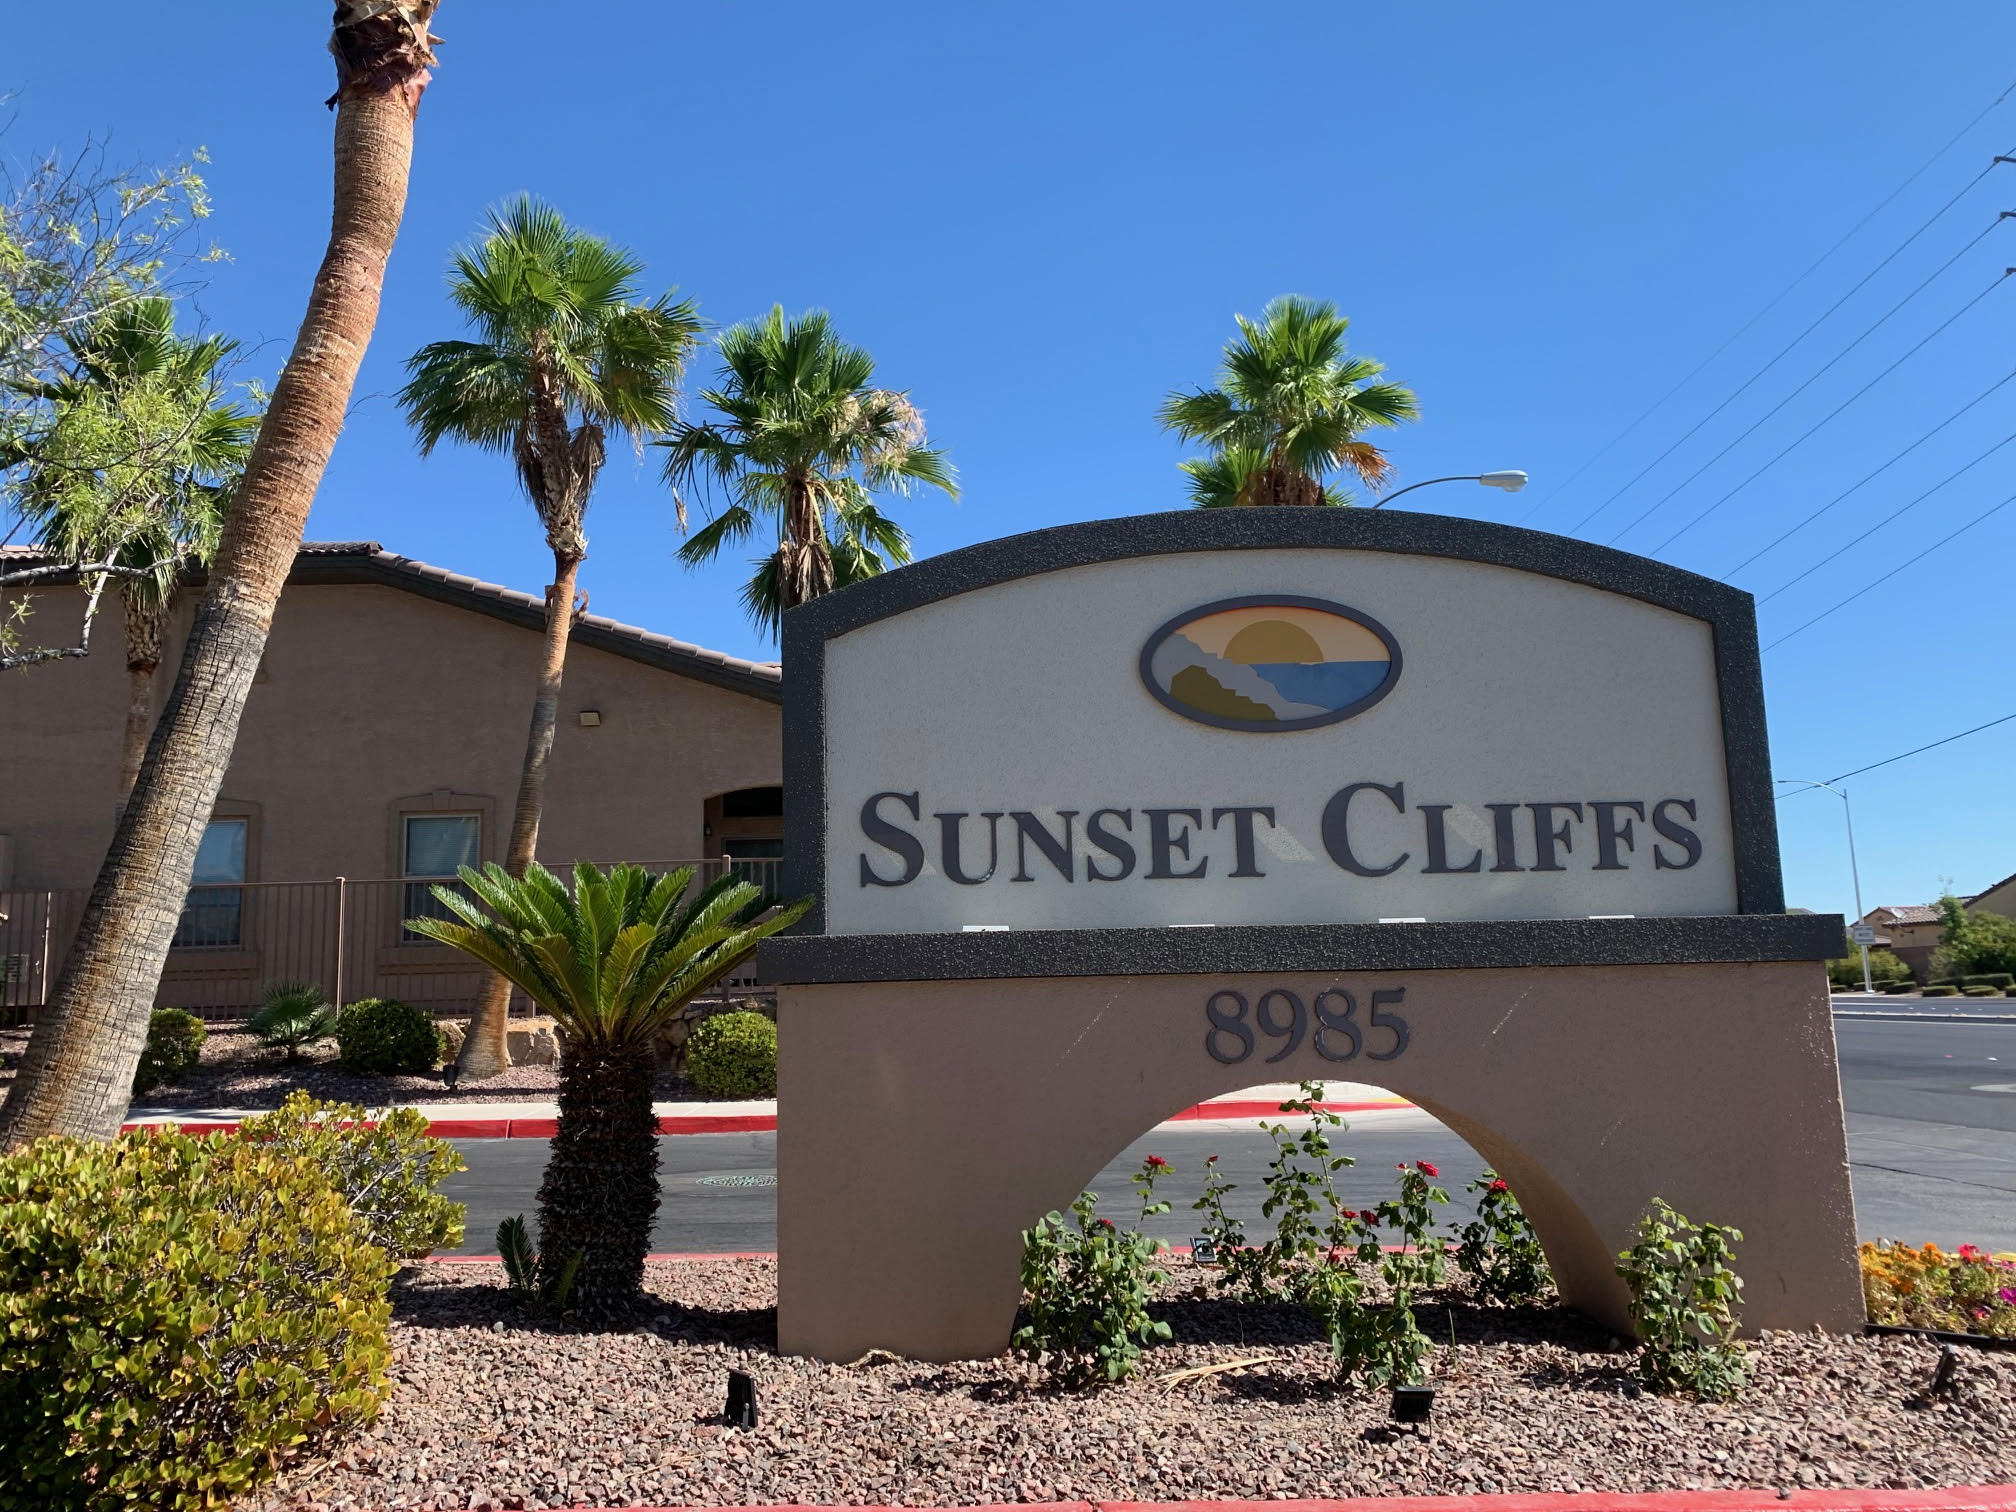 Sunset Cliffs Condos Las Vegas NV 89113 SeeVegasHomes